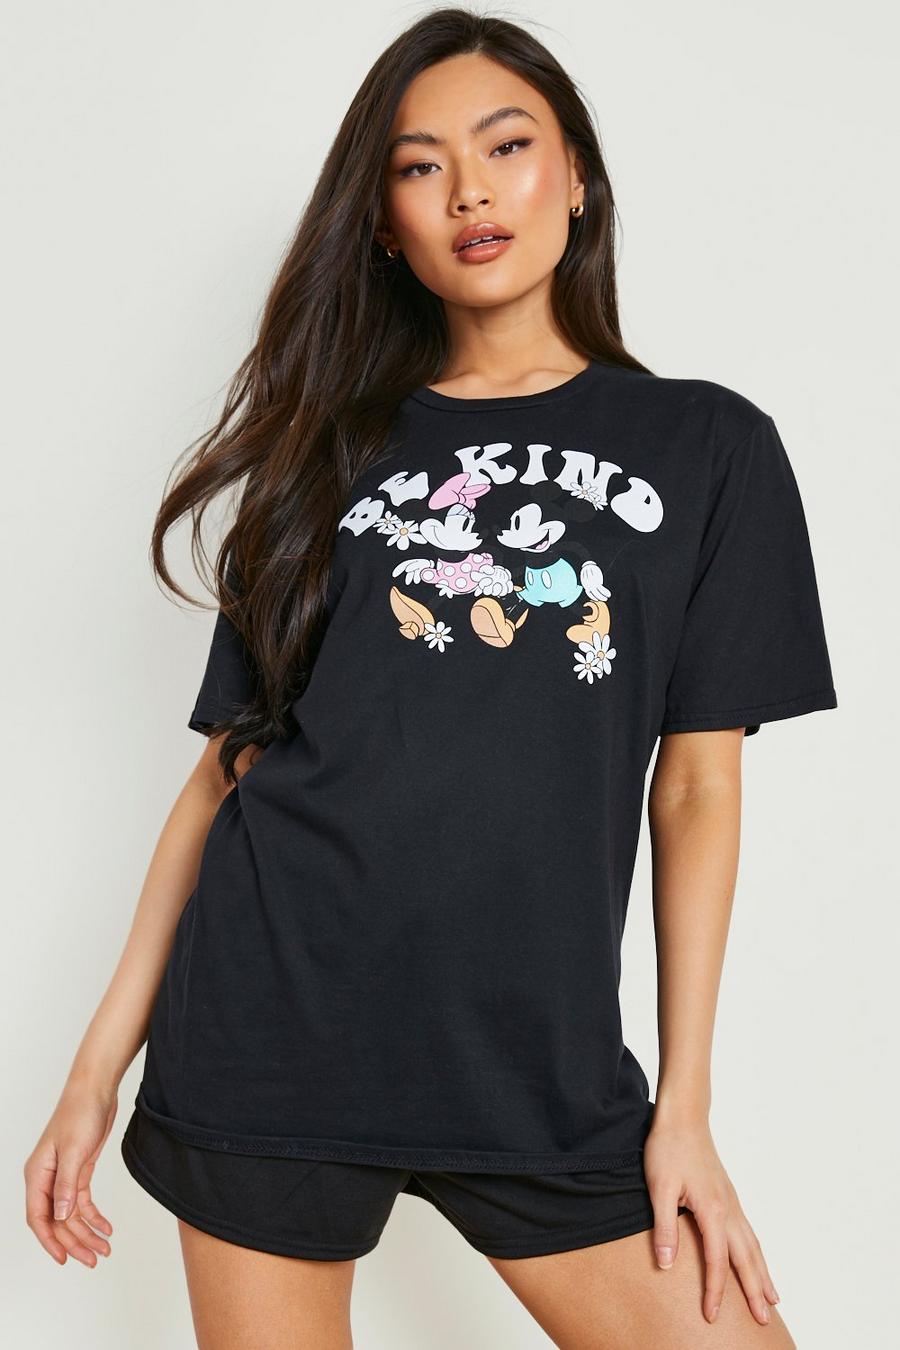 T-shirt Disney con Minnie & Mickey Mouse con scritta Be Kind & pantaloncini, Black